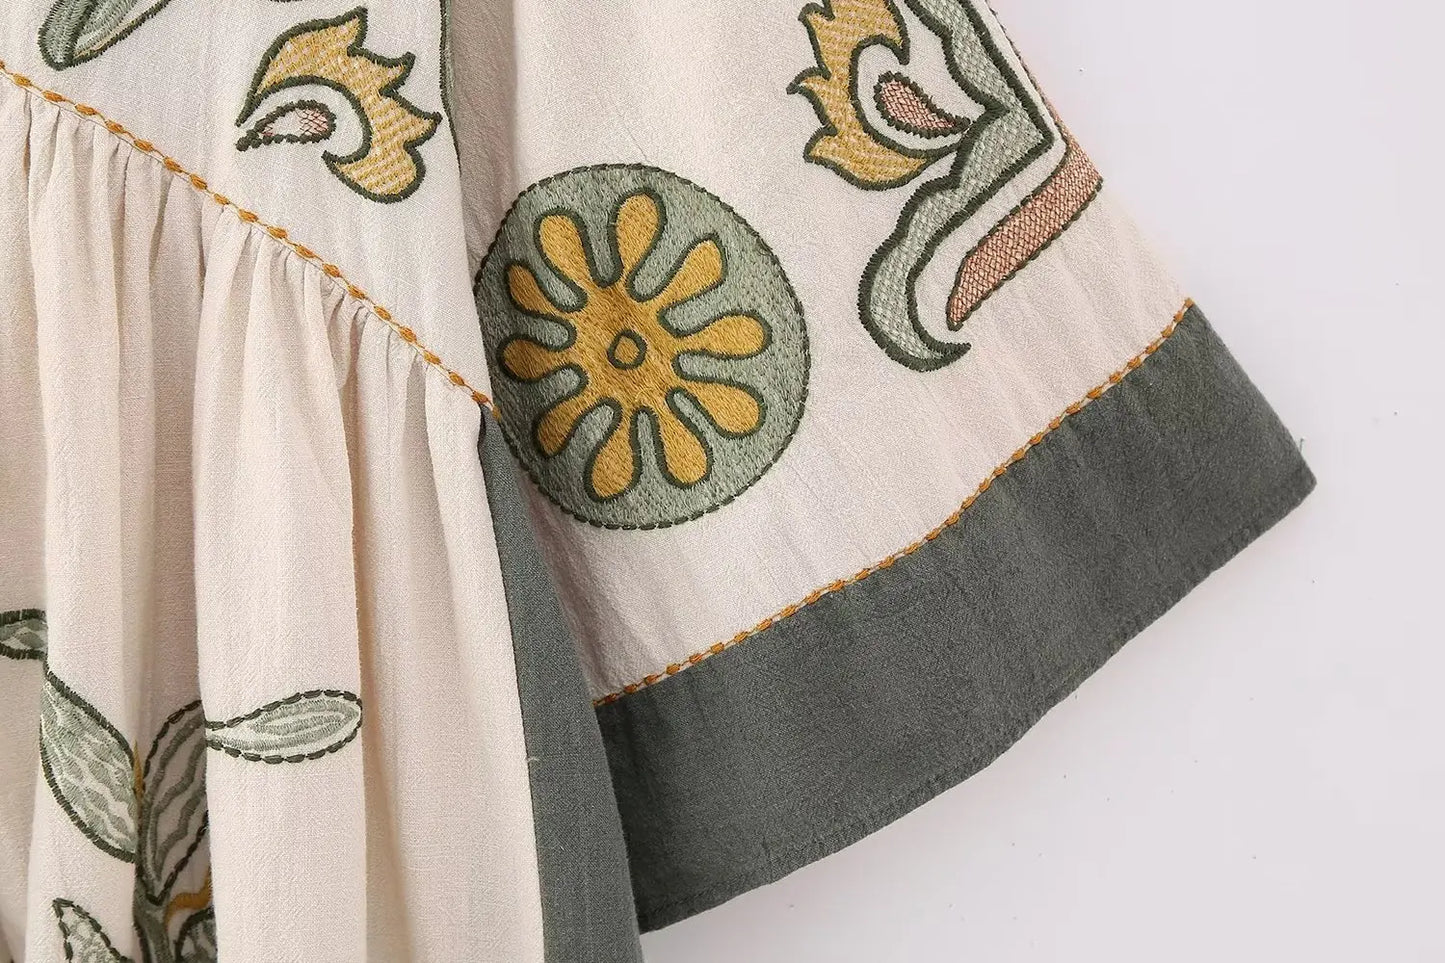 FashionSierra-Linen Cotton  Floral Embroidery  Vintage  O Neck  Loose  A-line  Short  Summer Beach Boho Dress